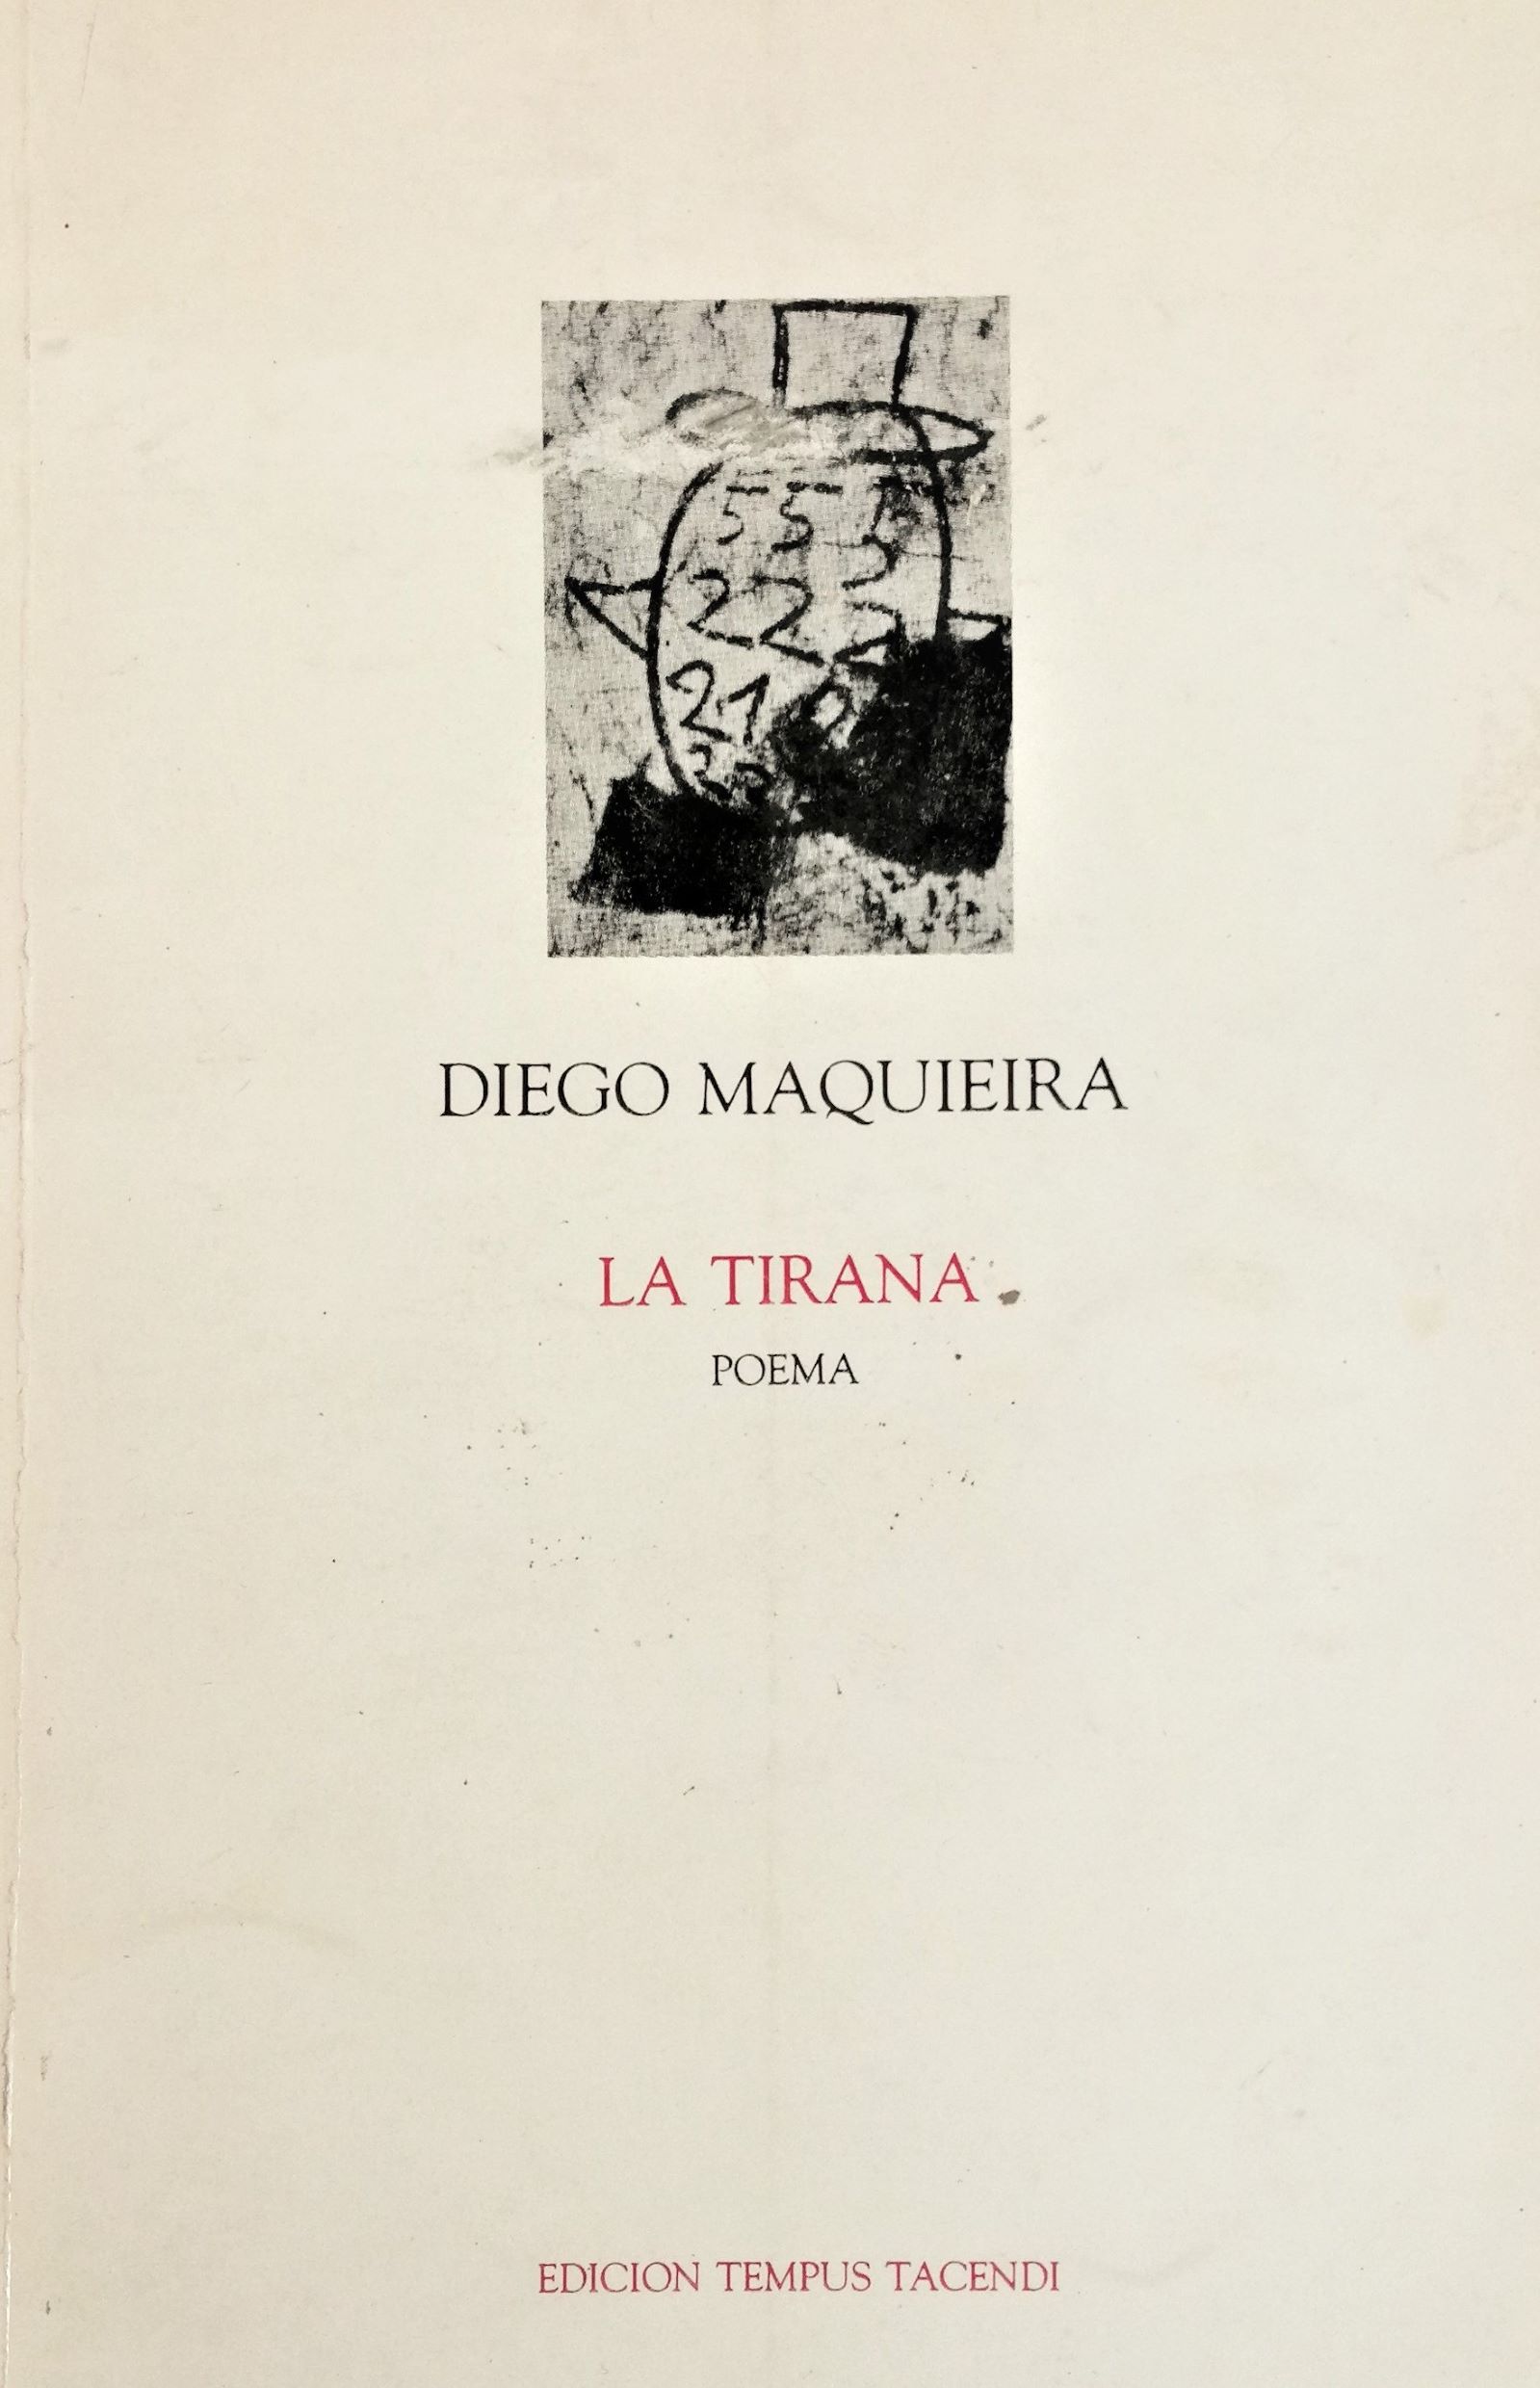 Diego Maquieira - La tirana